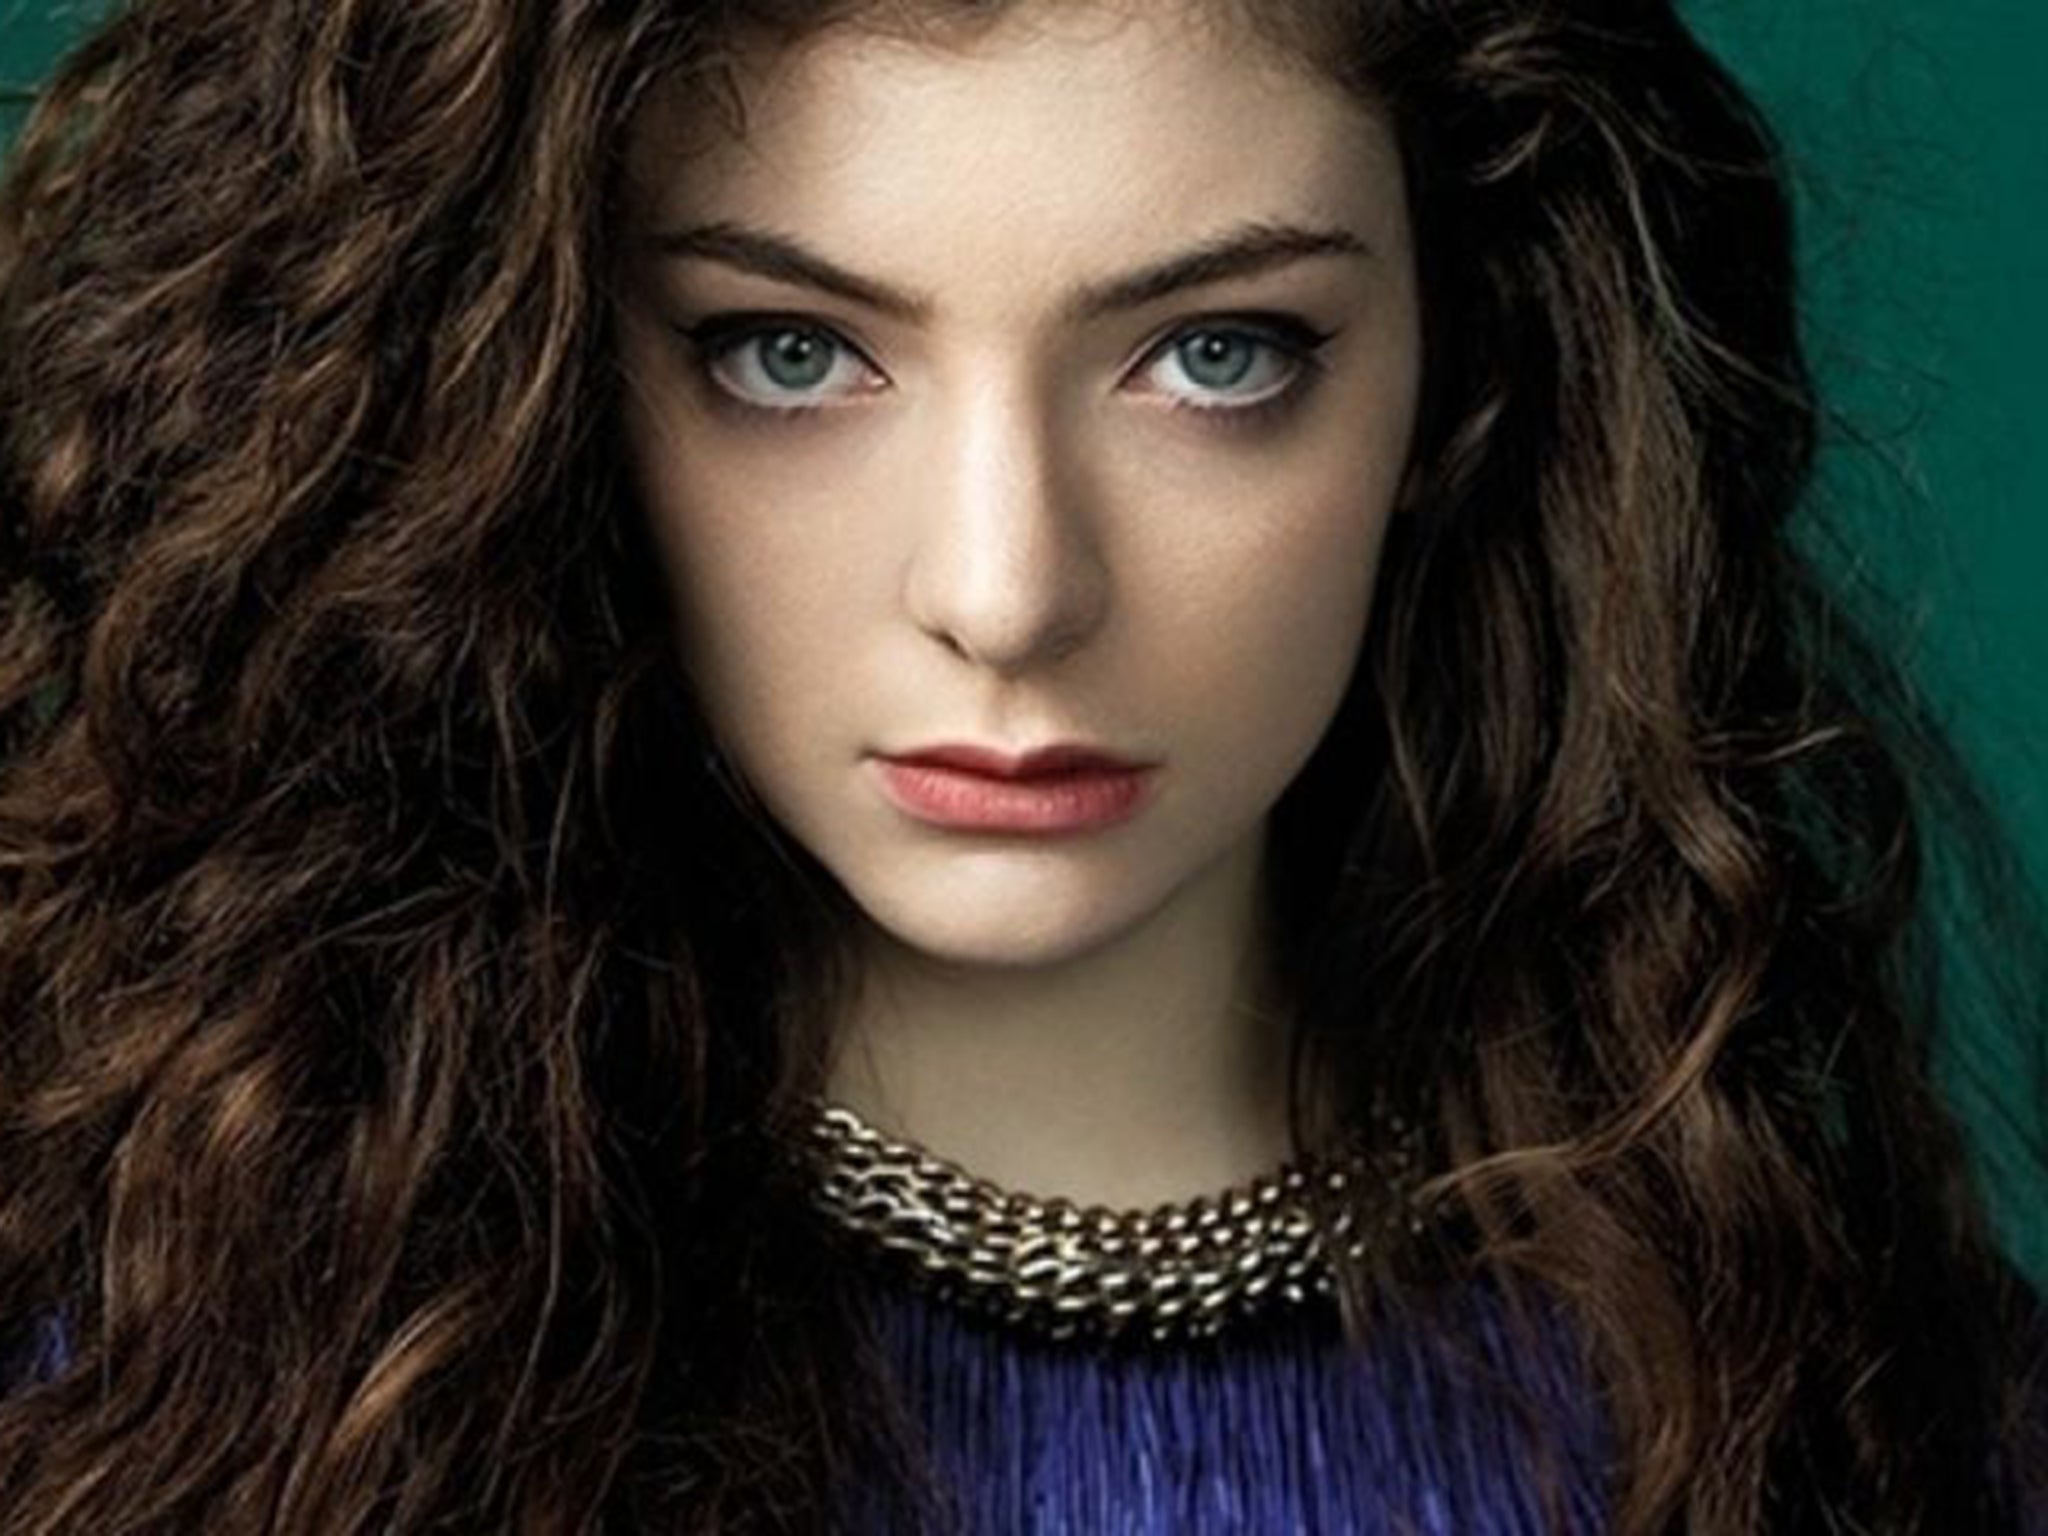 'Royal' - Lorde